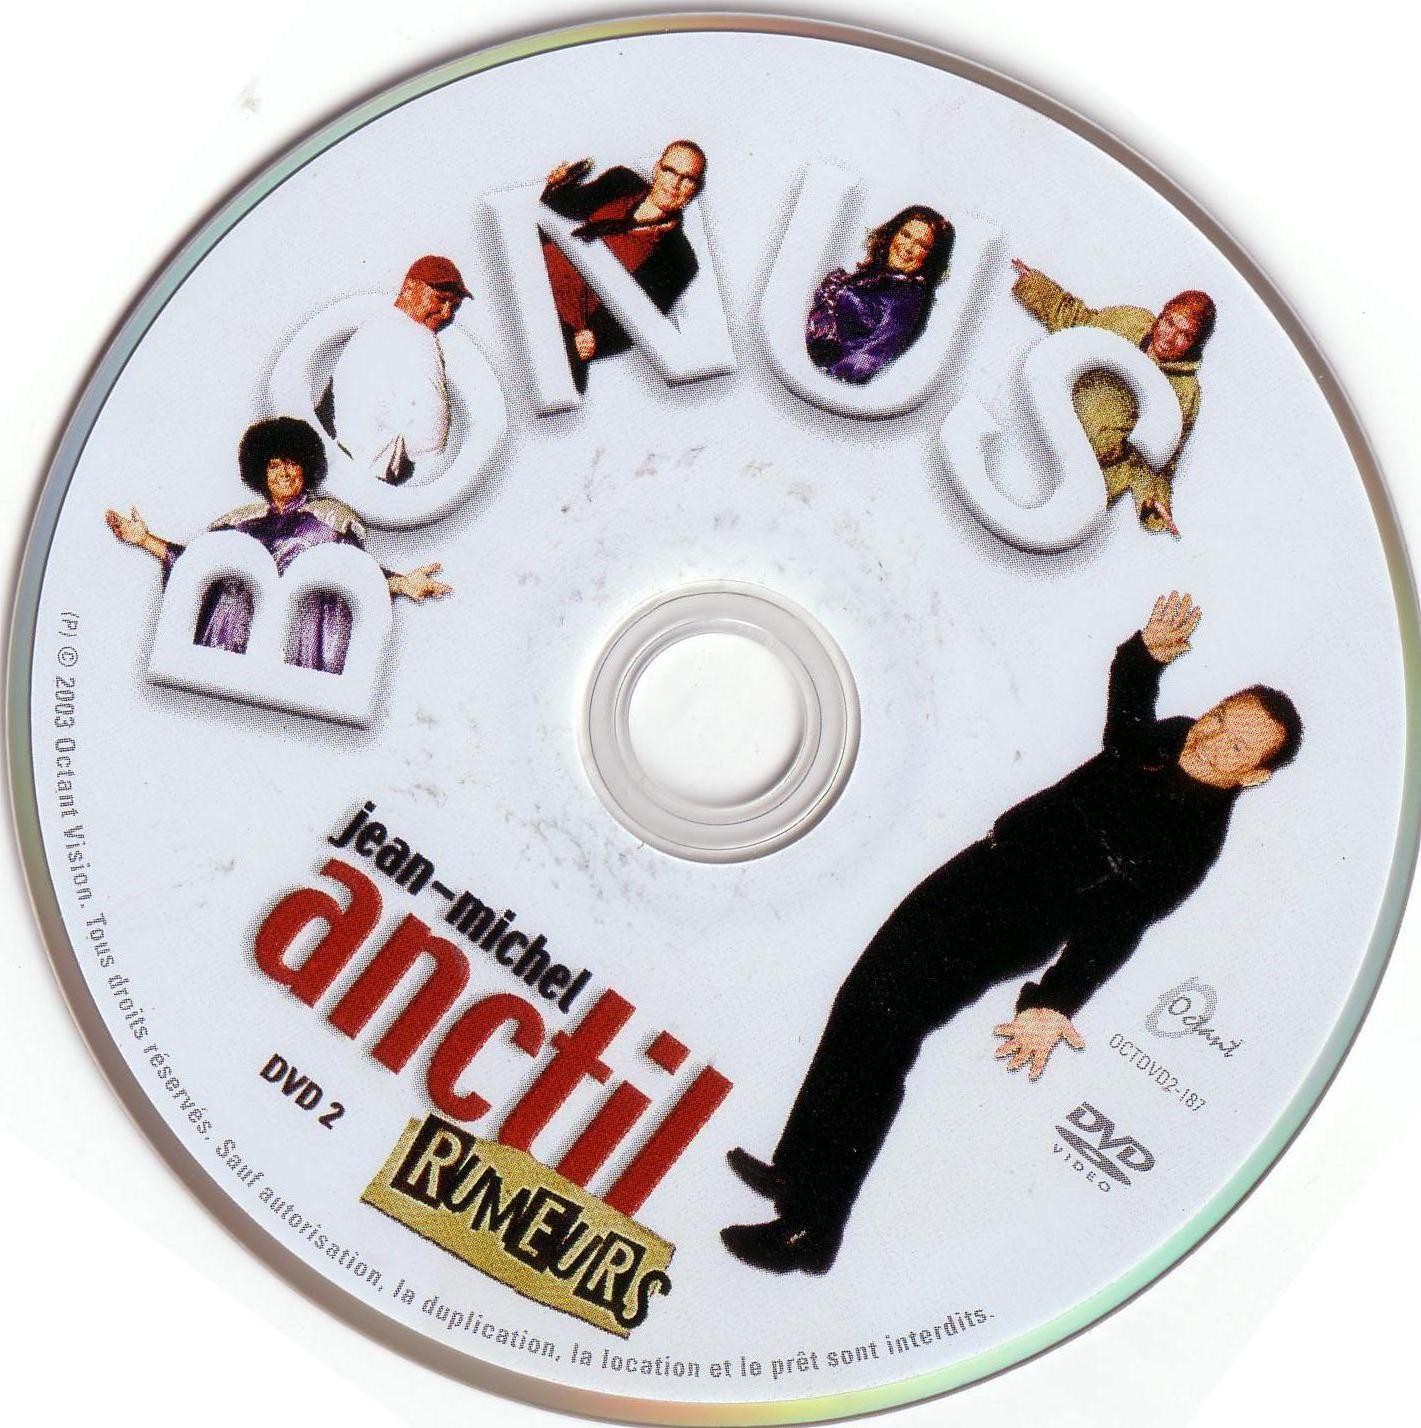 Jean-Michel Anctil (disc 2)